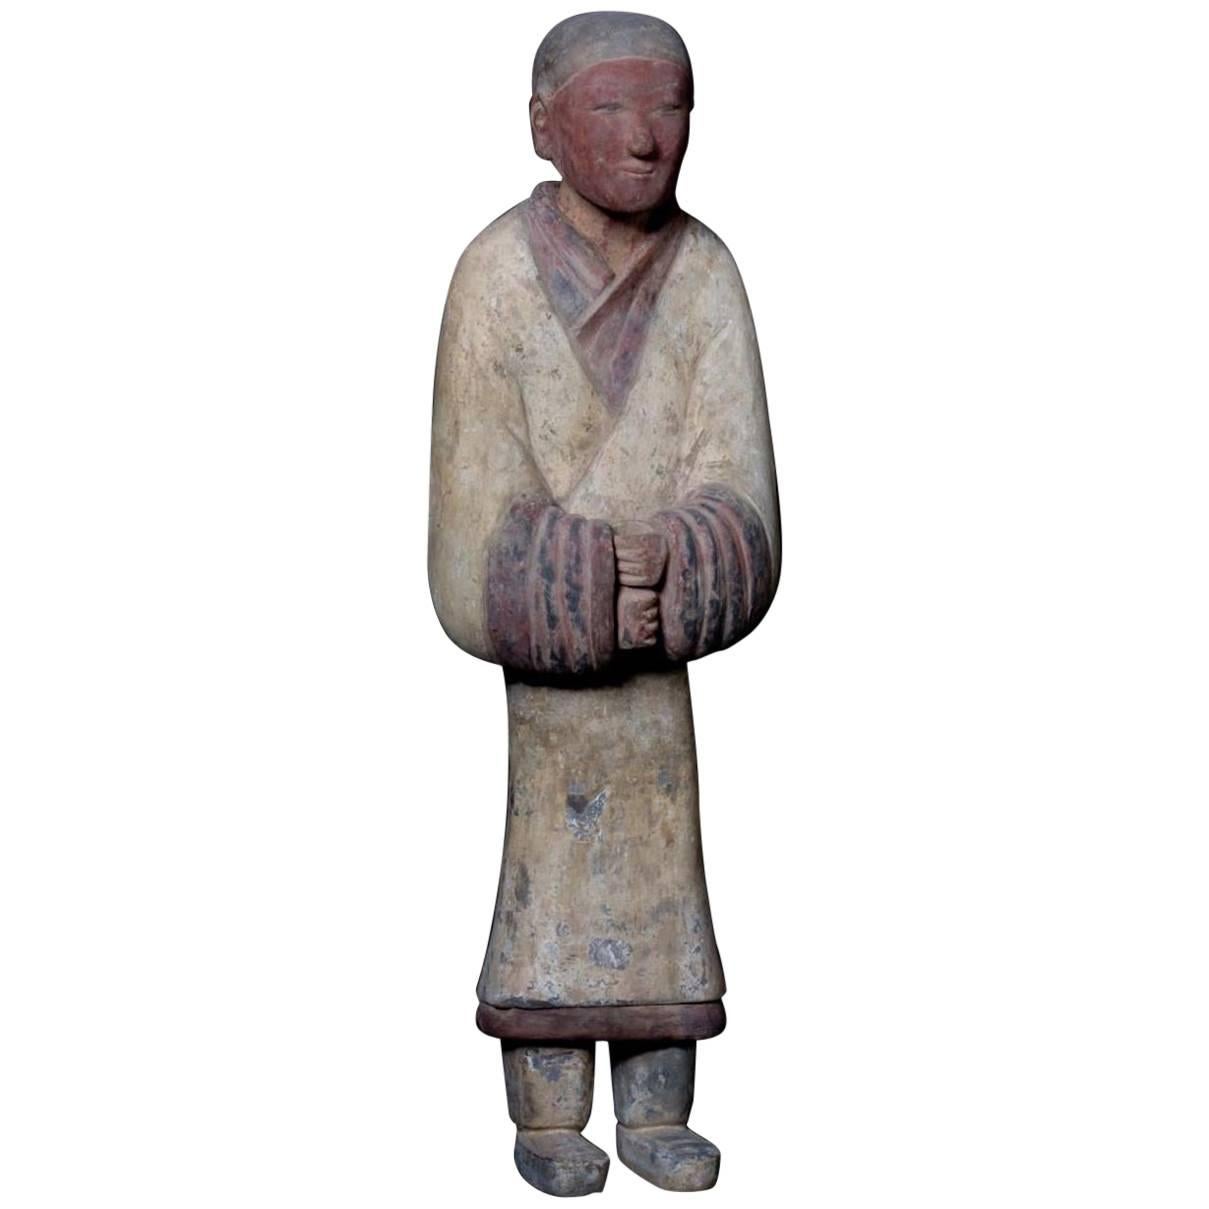 Elegant Han Dynasty Terracotta Warrior - China '206 BC - 220 AD' For Sale